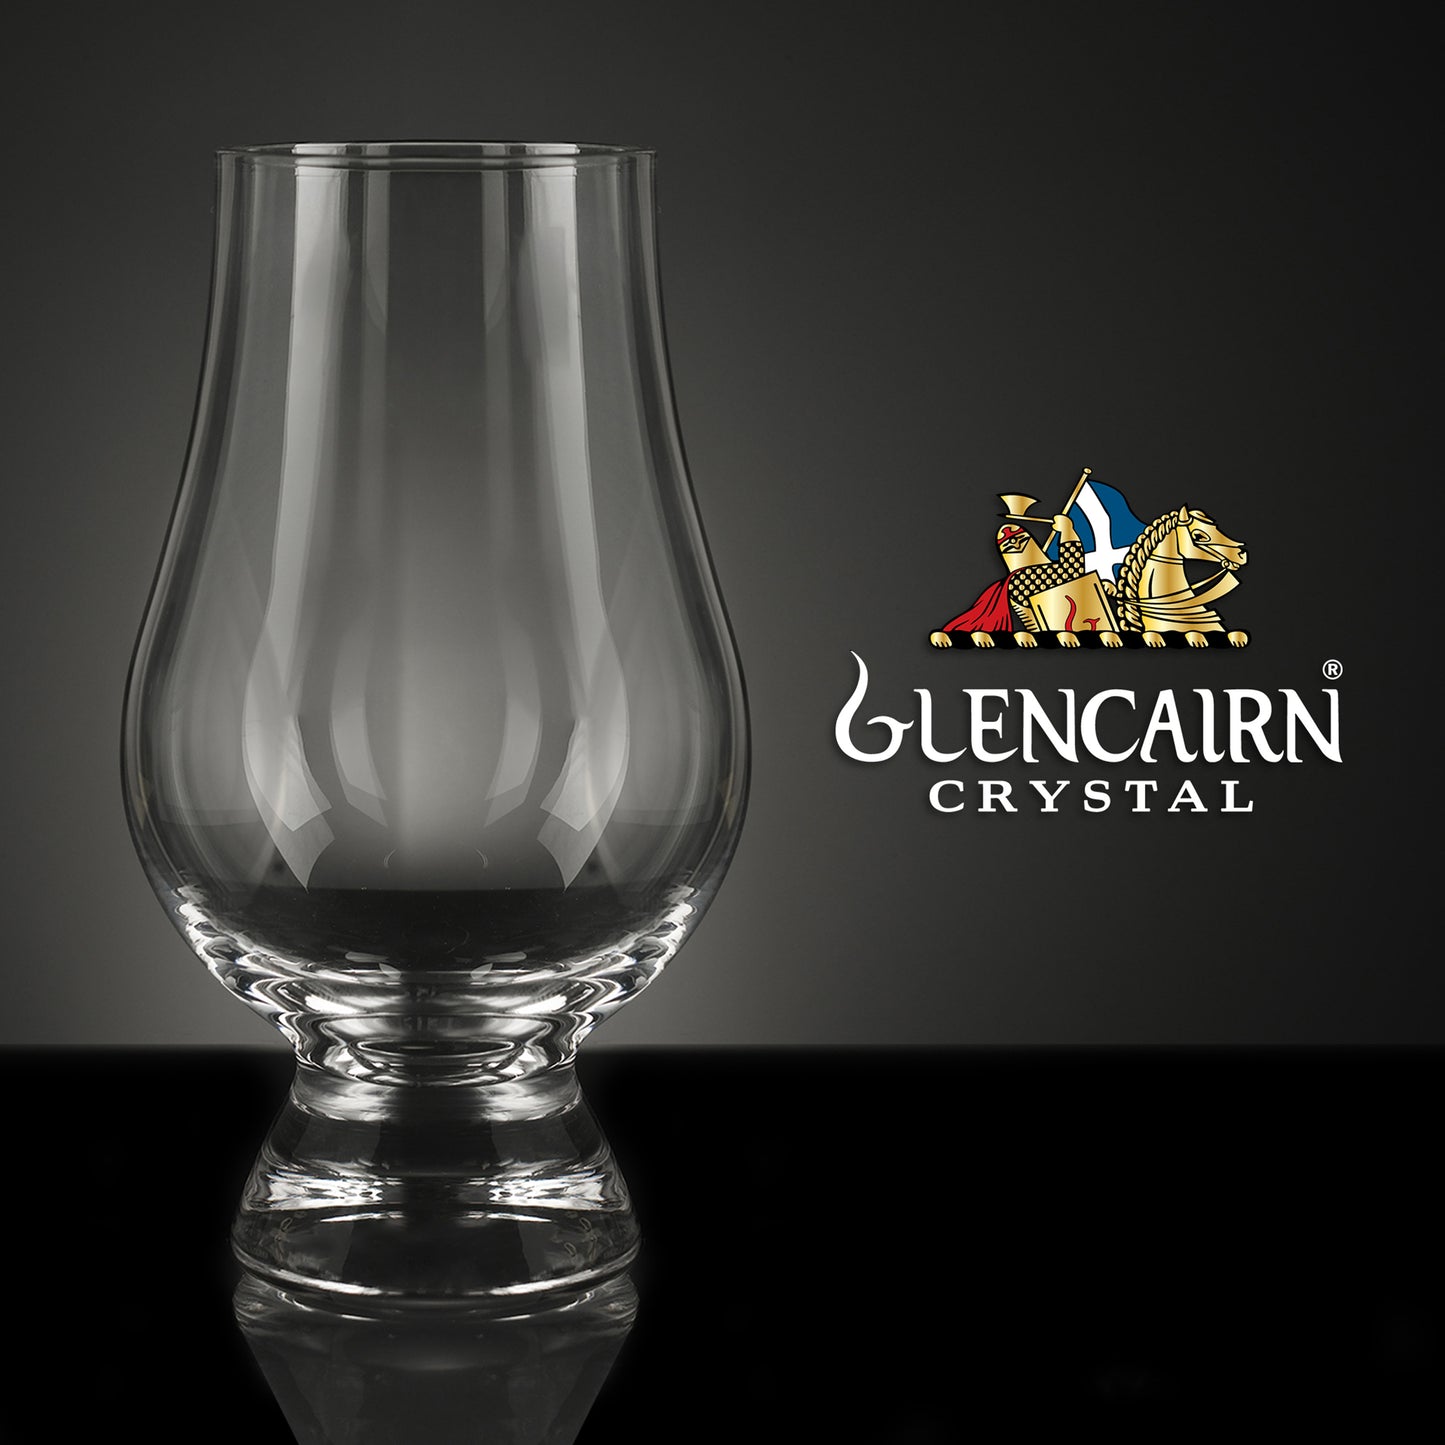 The Official Glencairn Whisky Glass, Official Blind Tasting Crystal Whiskey Glassware